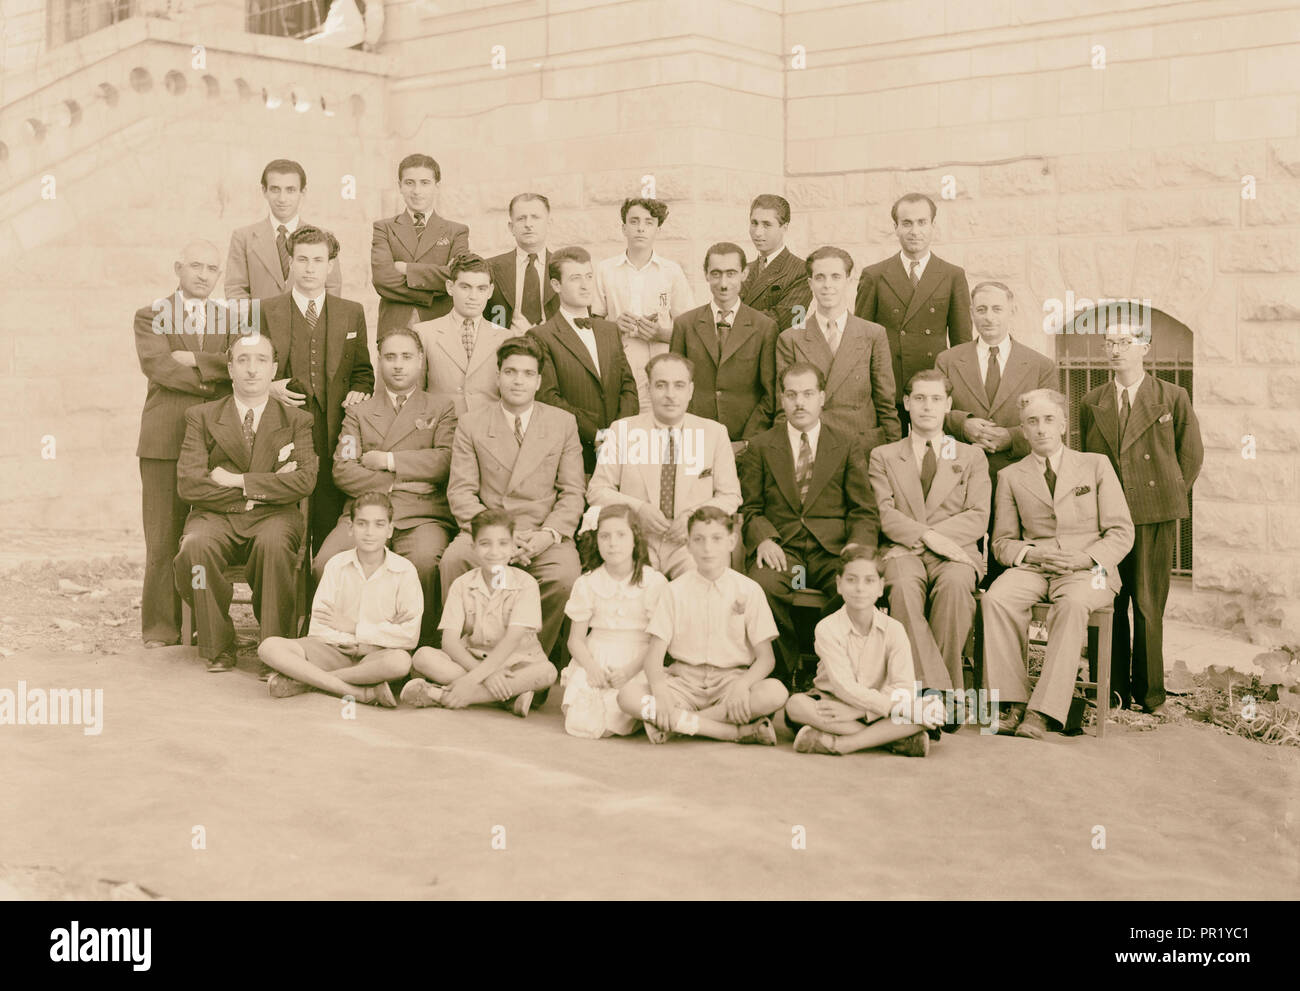 P.B.S groups taken on Aug. 8, 1942 (Arabs & Jews), smaller group 1942, Jerusalem, Israel Stock Photo